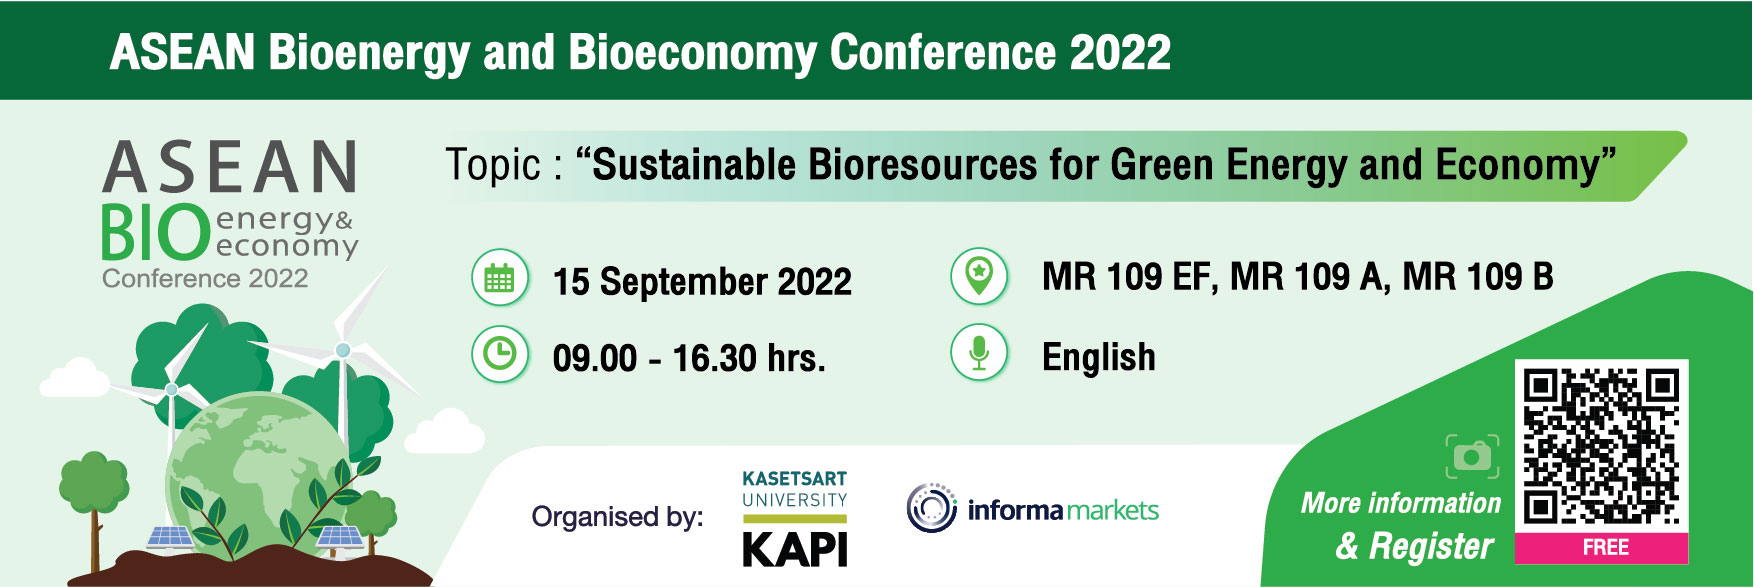 ASEAN Bioenergy and Bioeconomy Conference 2022